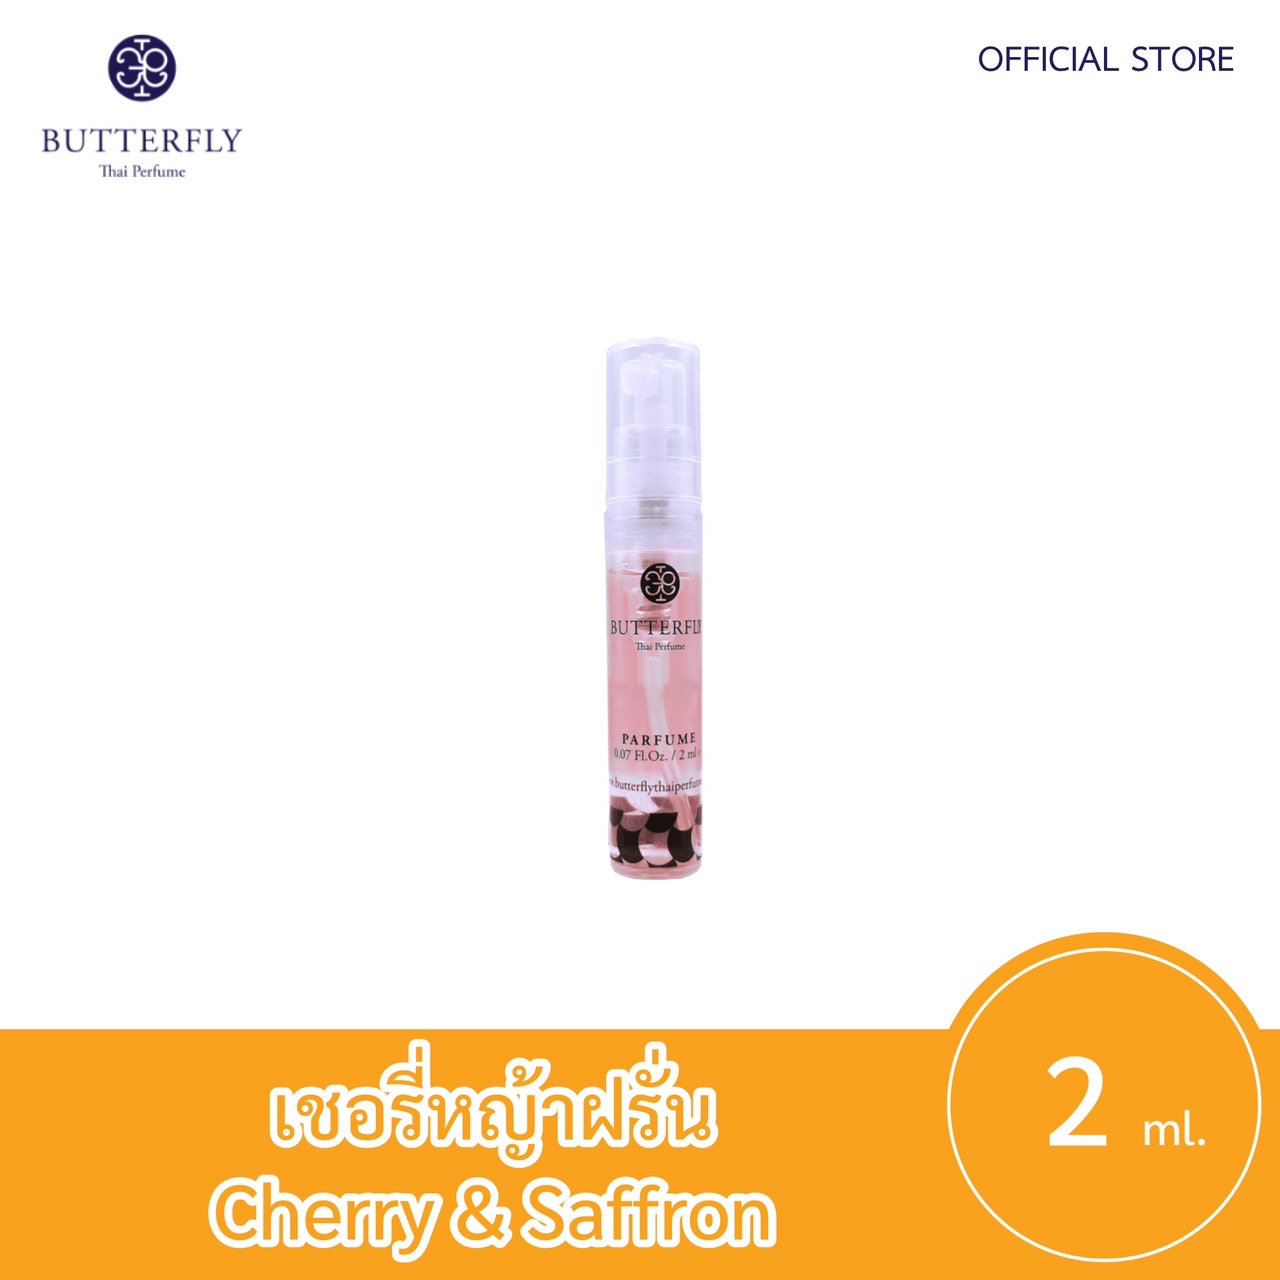 Butterfly Thai Perfume - น้ำหอมบัตเตอร์ฟลาย ไทย เพอร์ฟูม  ขนาดทดลอง 2ml.  กลิ่น เชอรี่หญ้าฝรั่นปริมาณ (มล.) 2